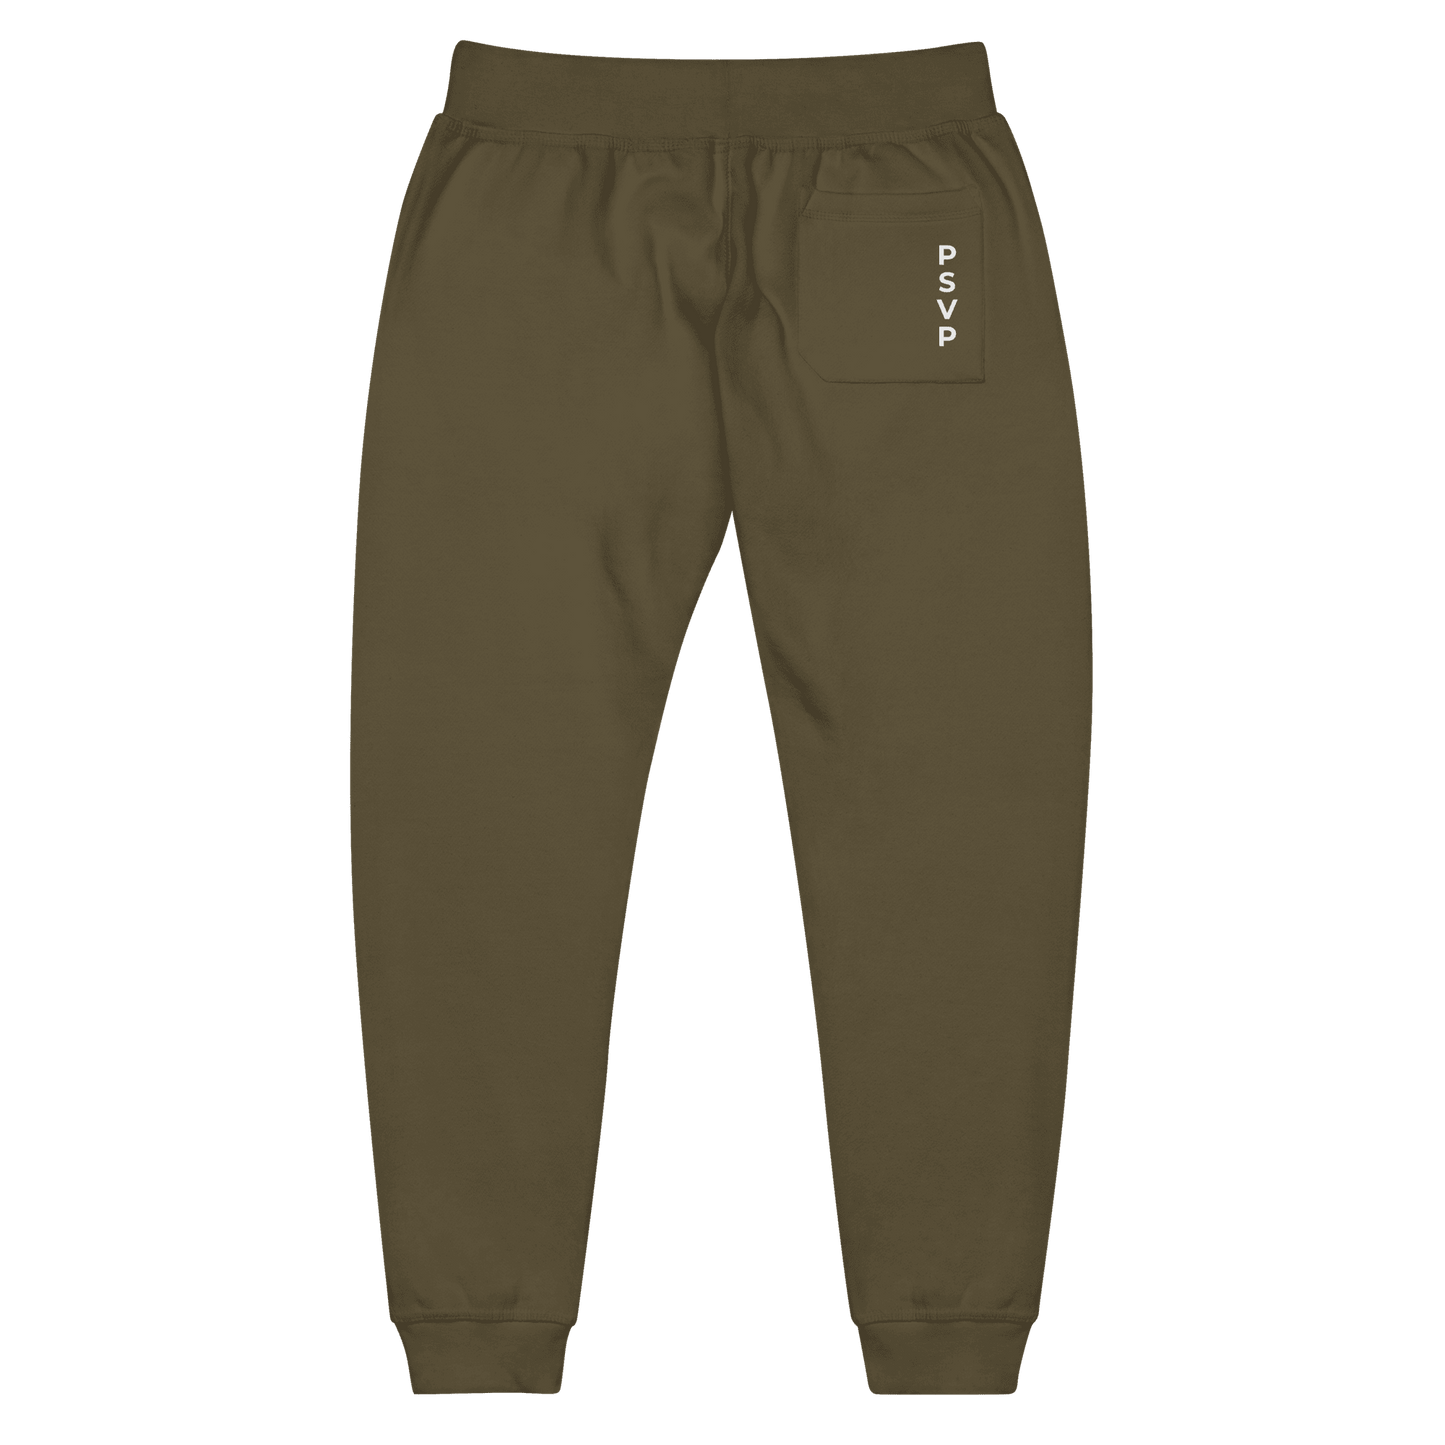 Comfy Military Green Fleece Sweatpants - PSVP | Sweatpants | PARADIS SVP